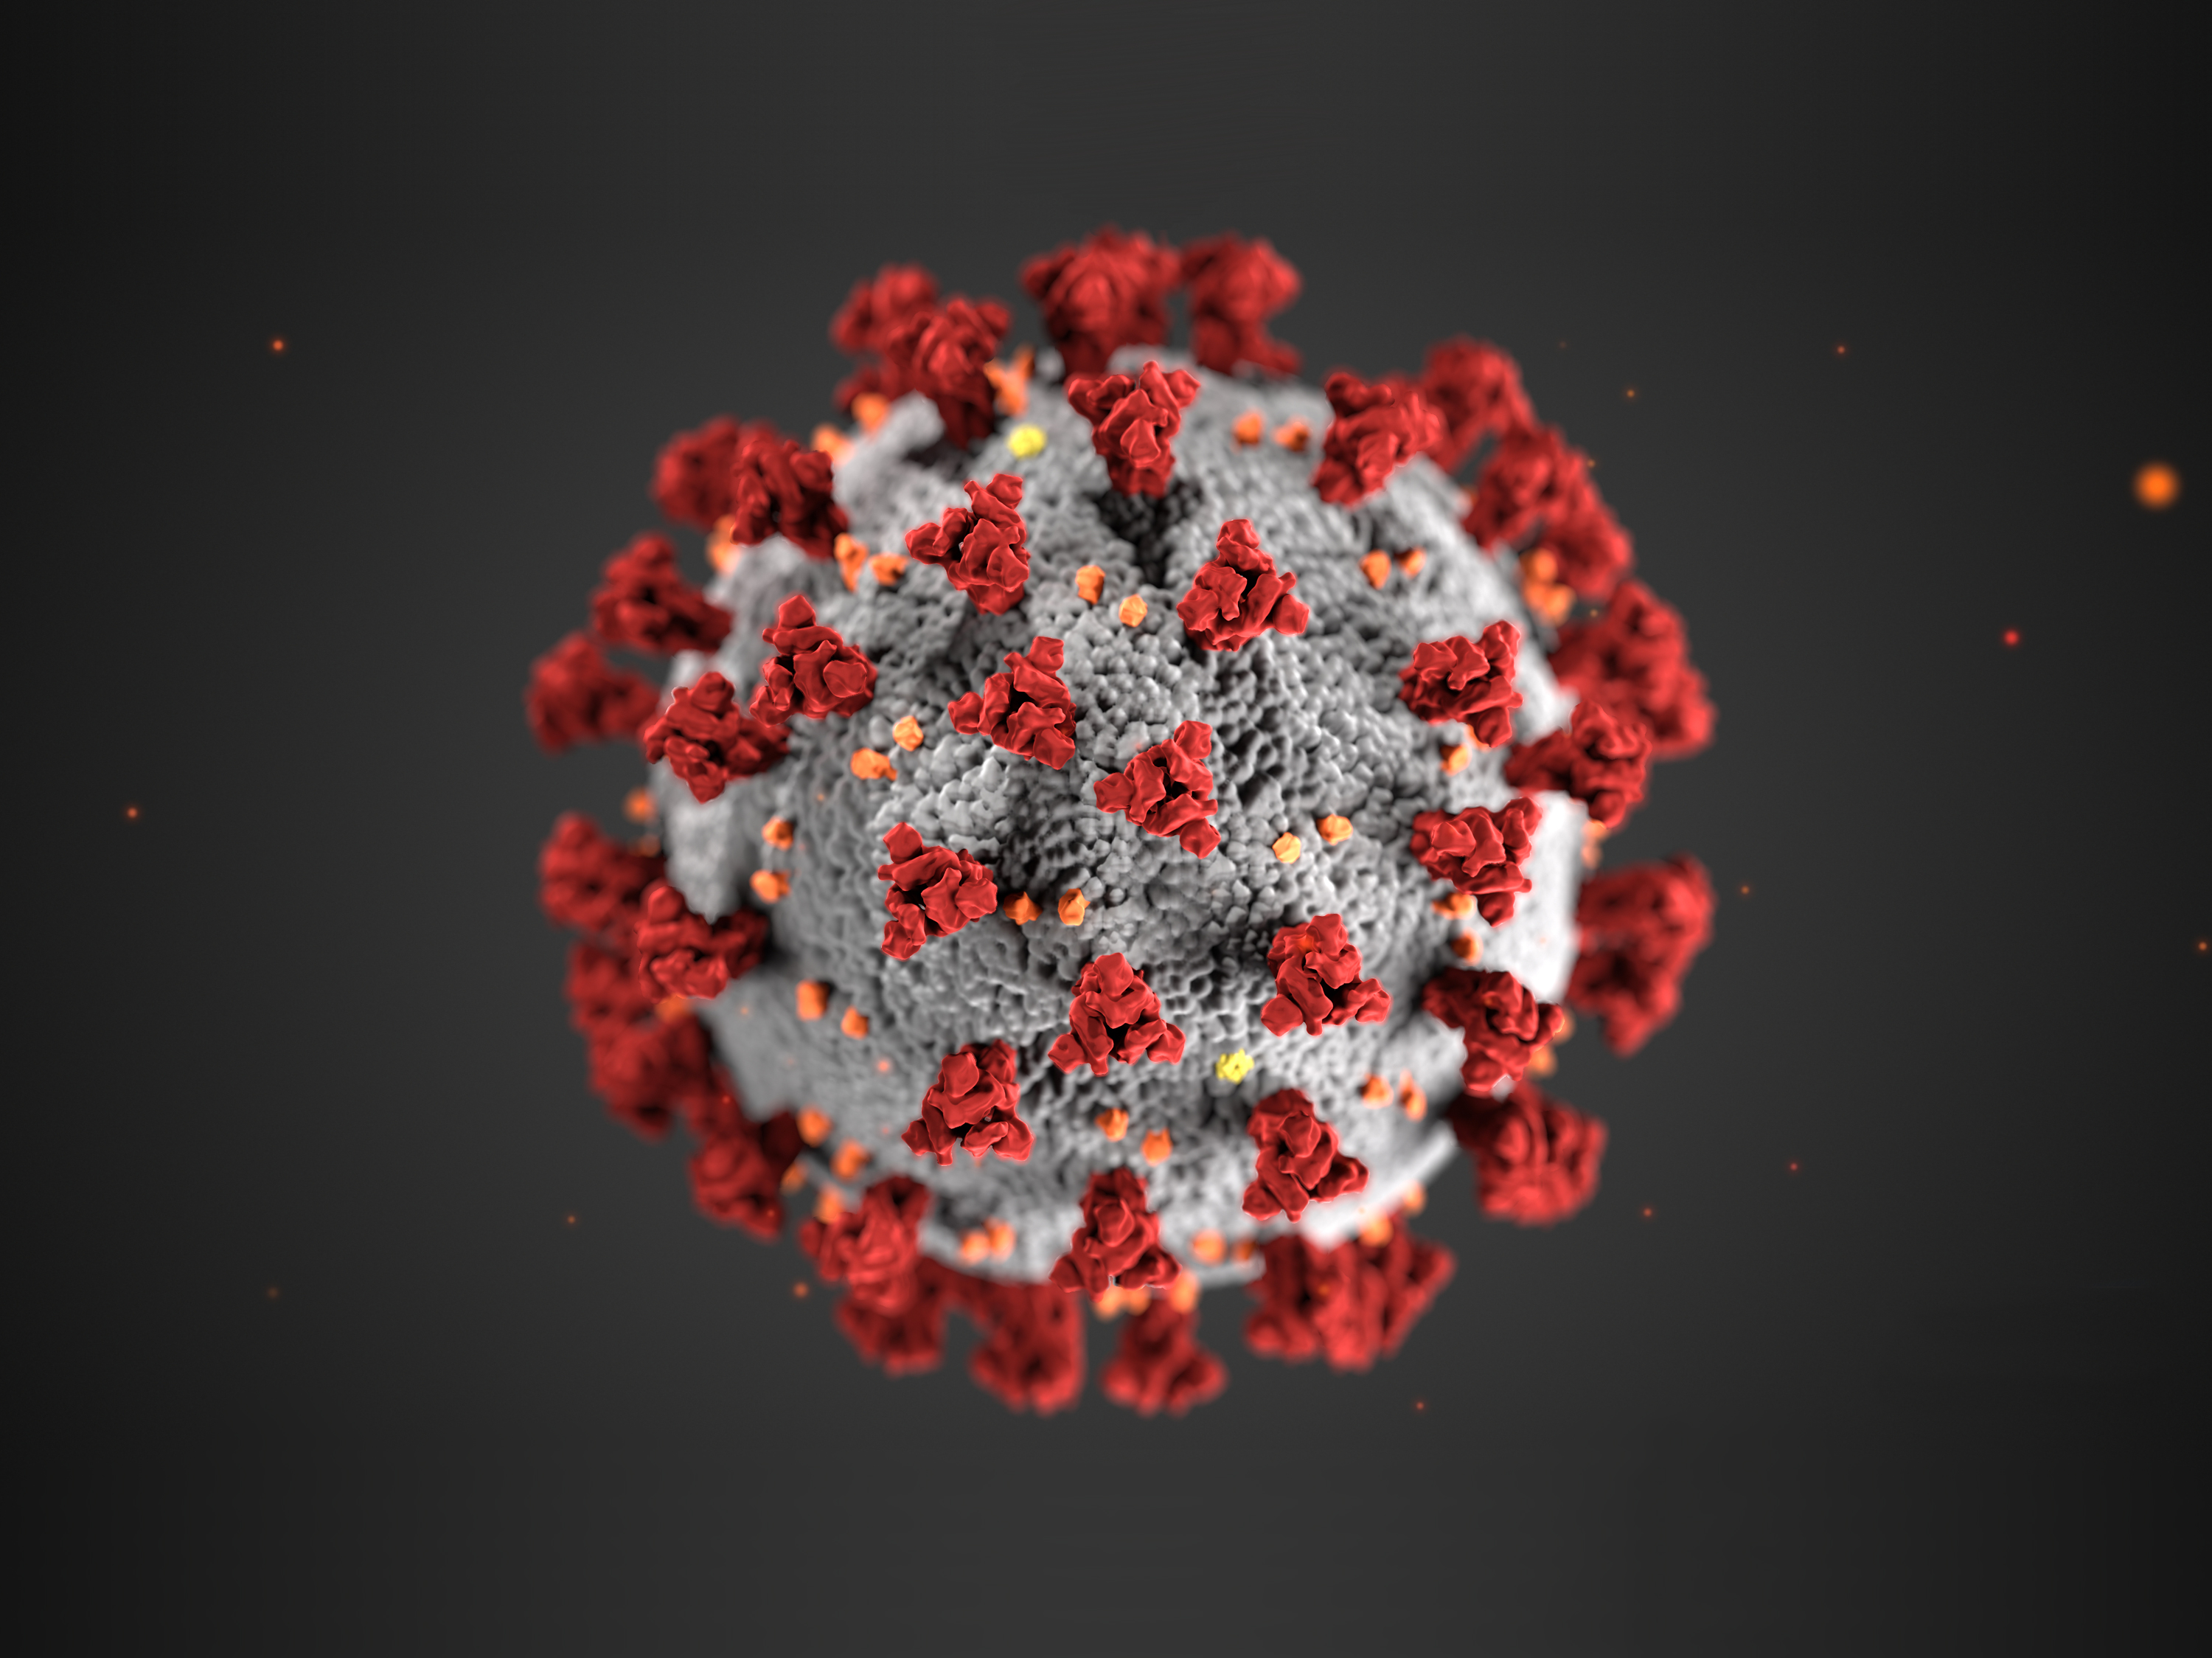 microscopically magnified image of a coronavirus